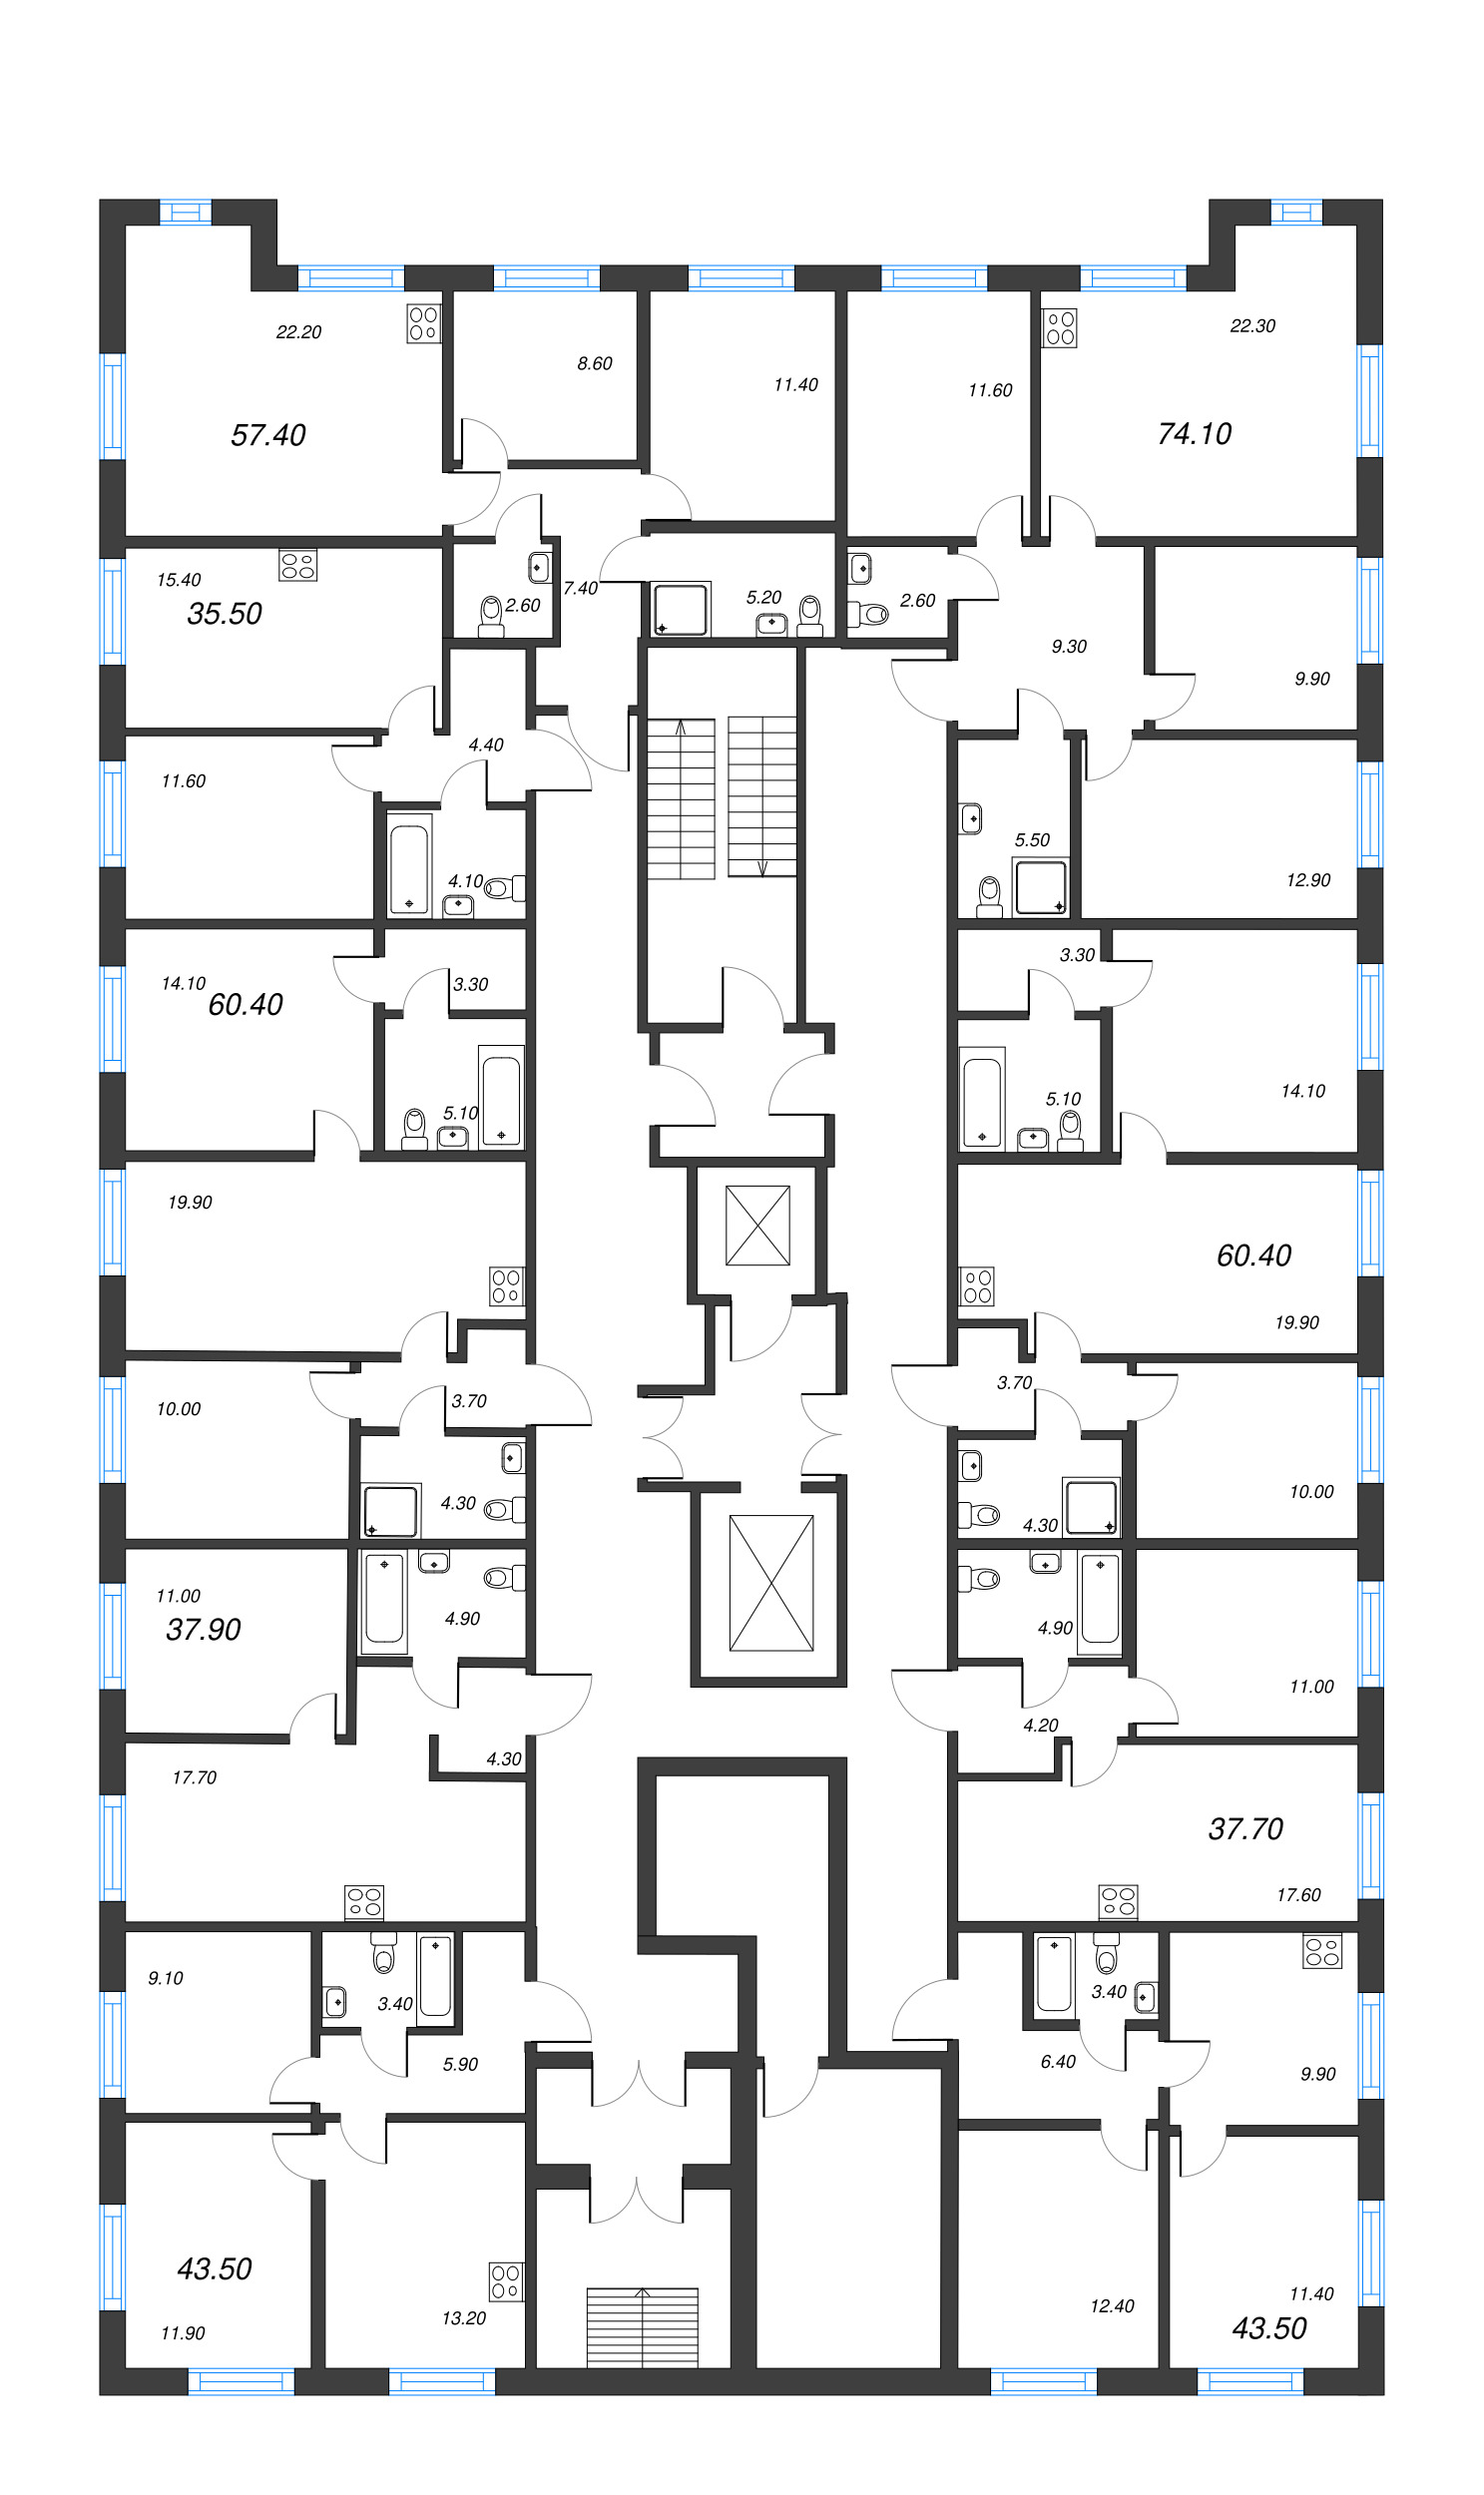 3-комнатная (Евро) квартира, 60.4 м² - планировка этажа